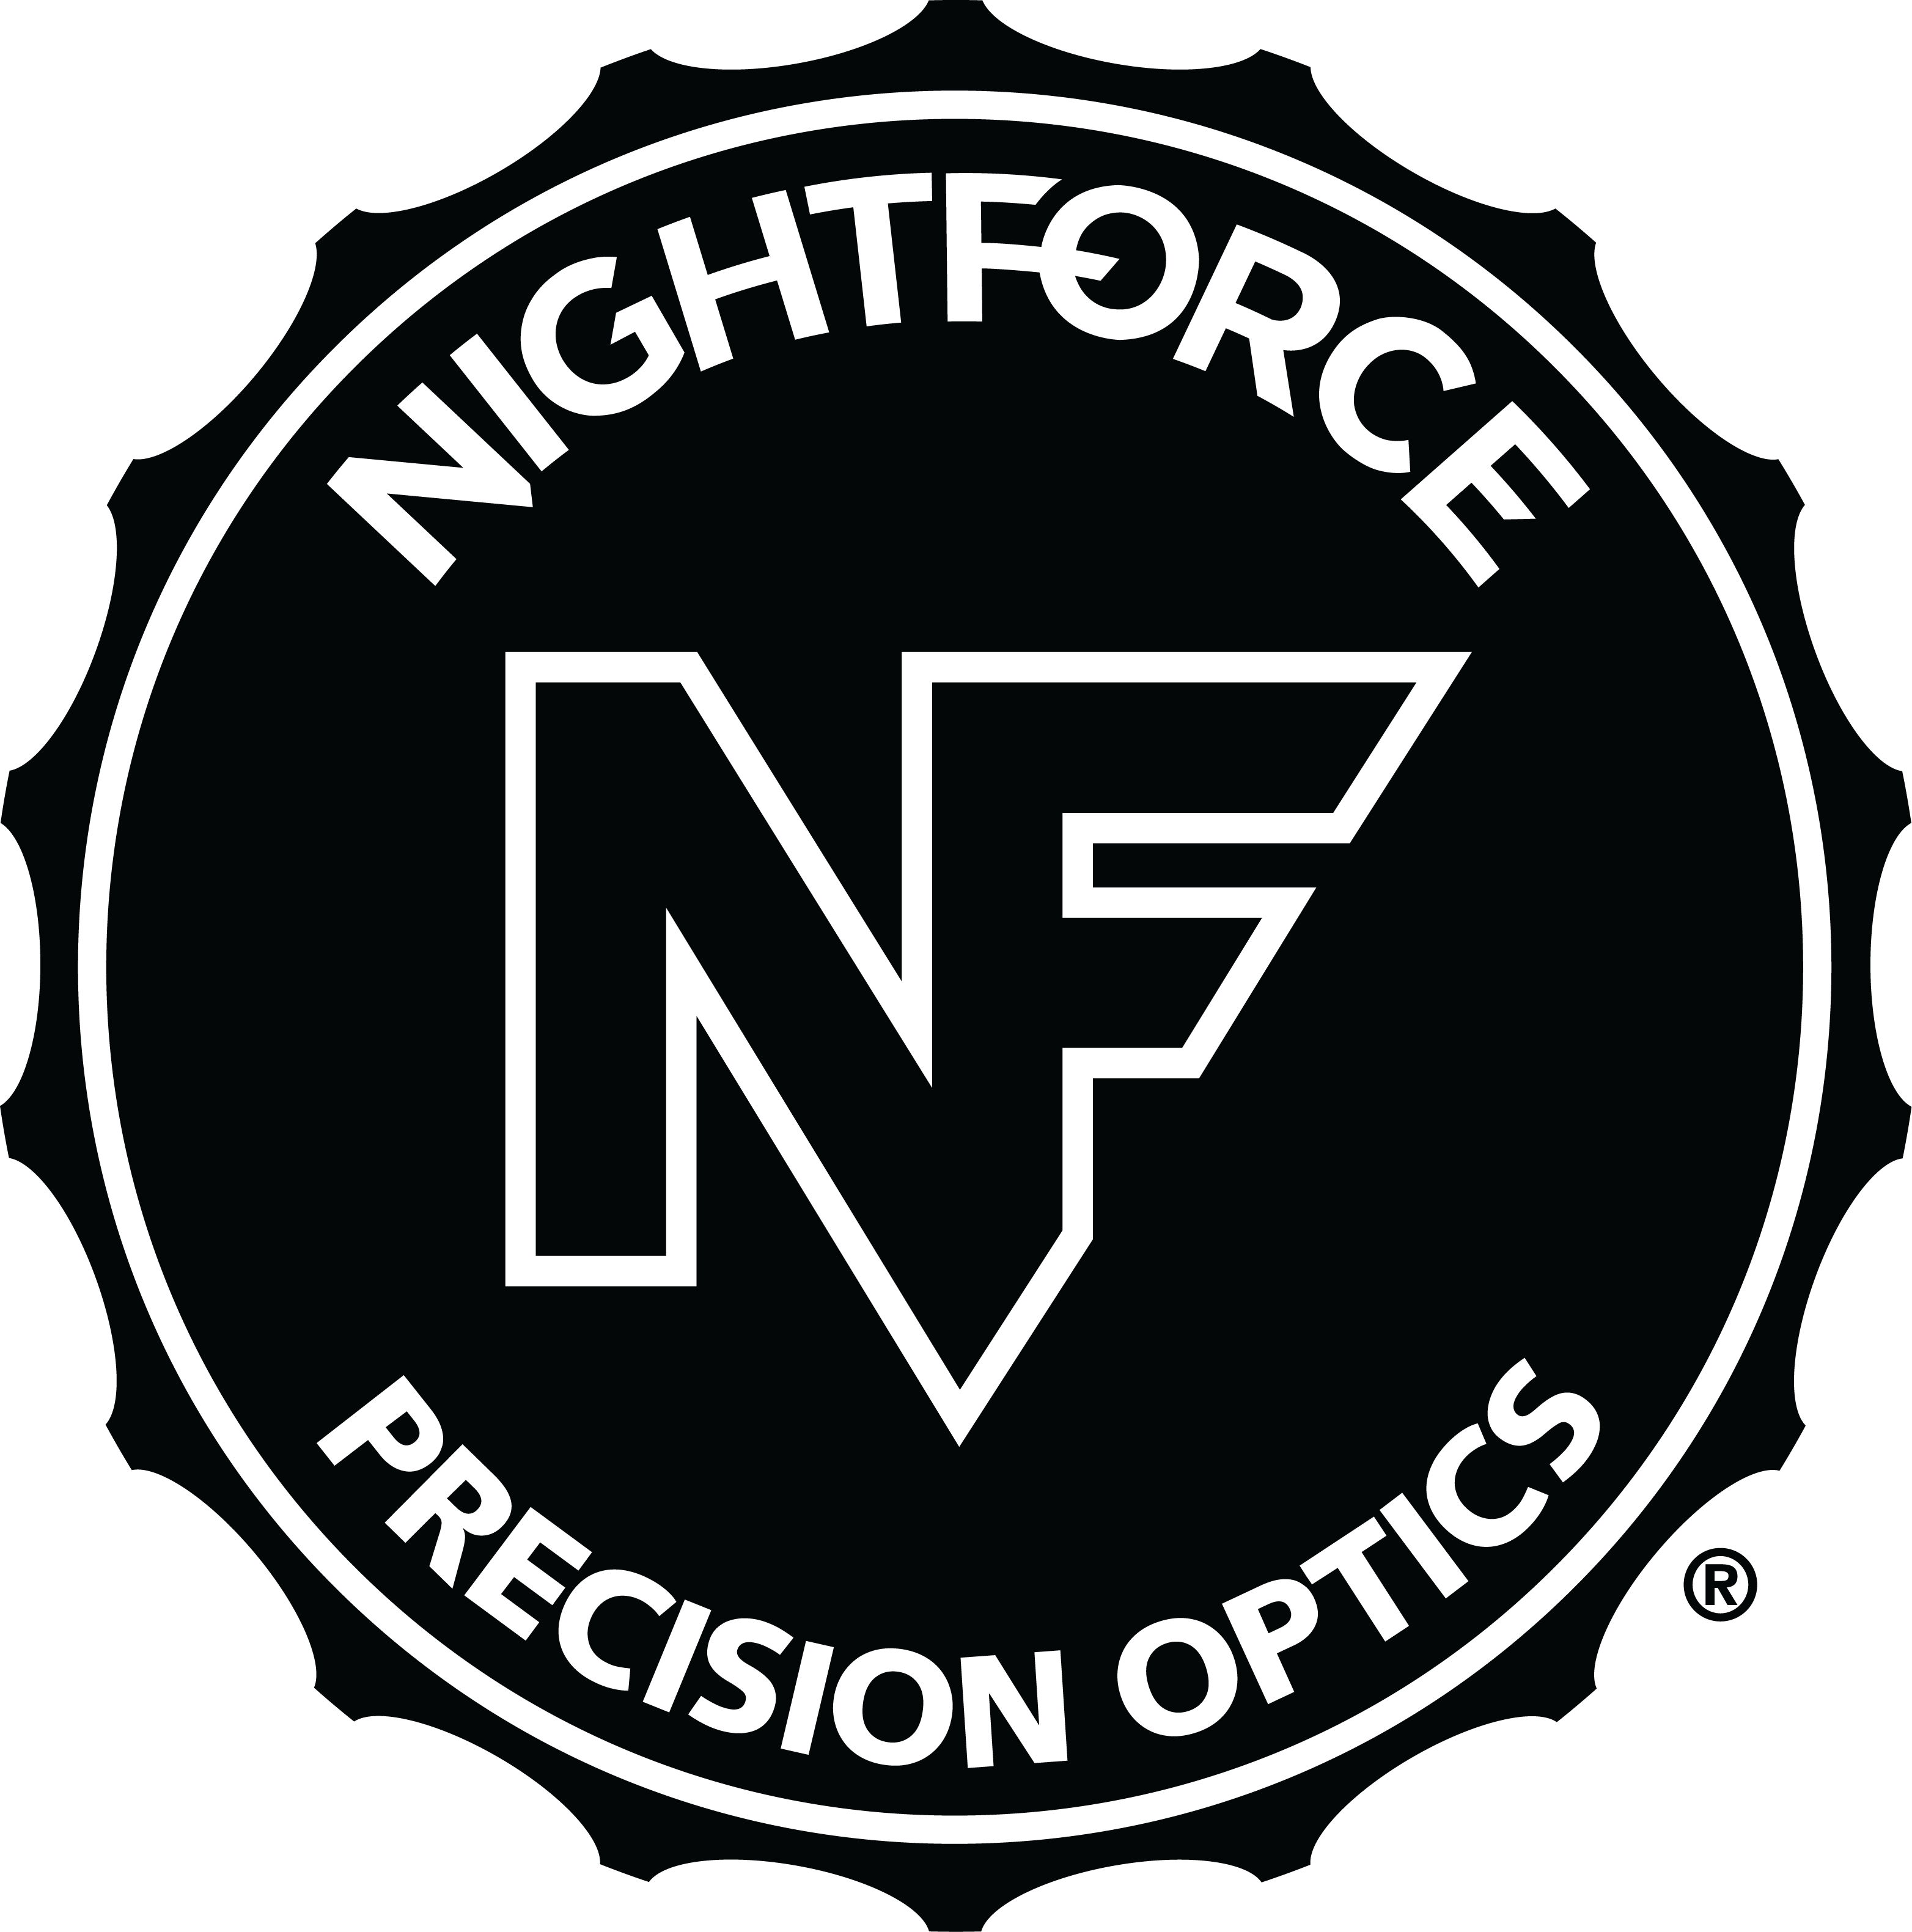 www.nightforceoptics.com